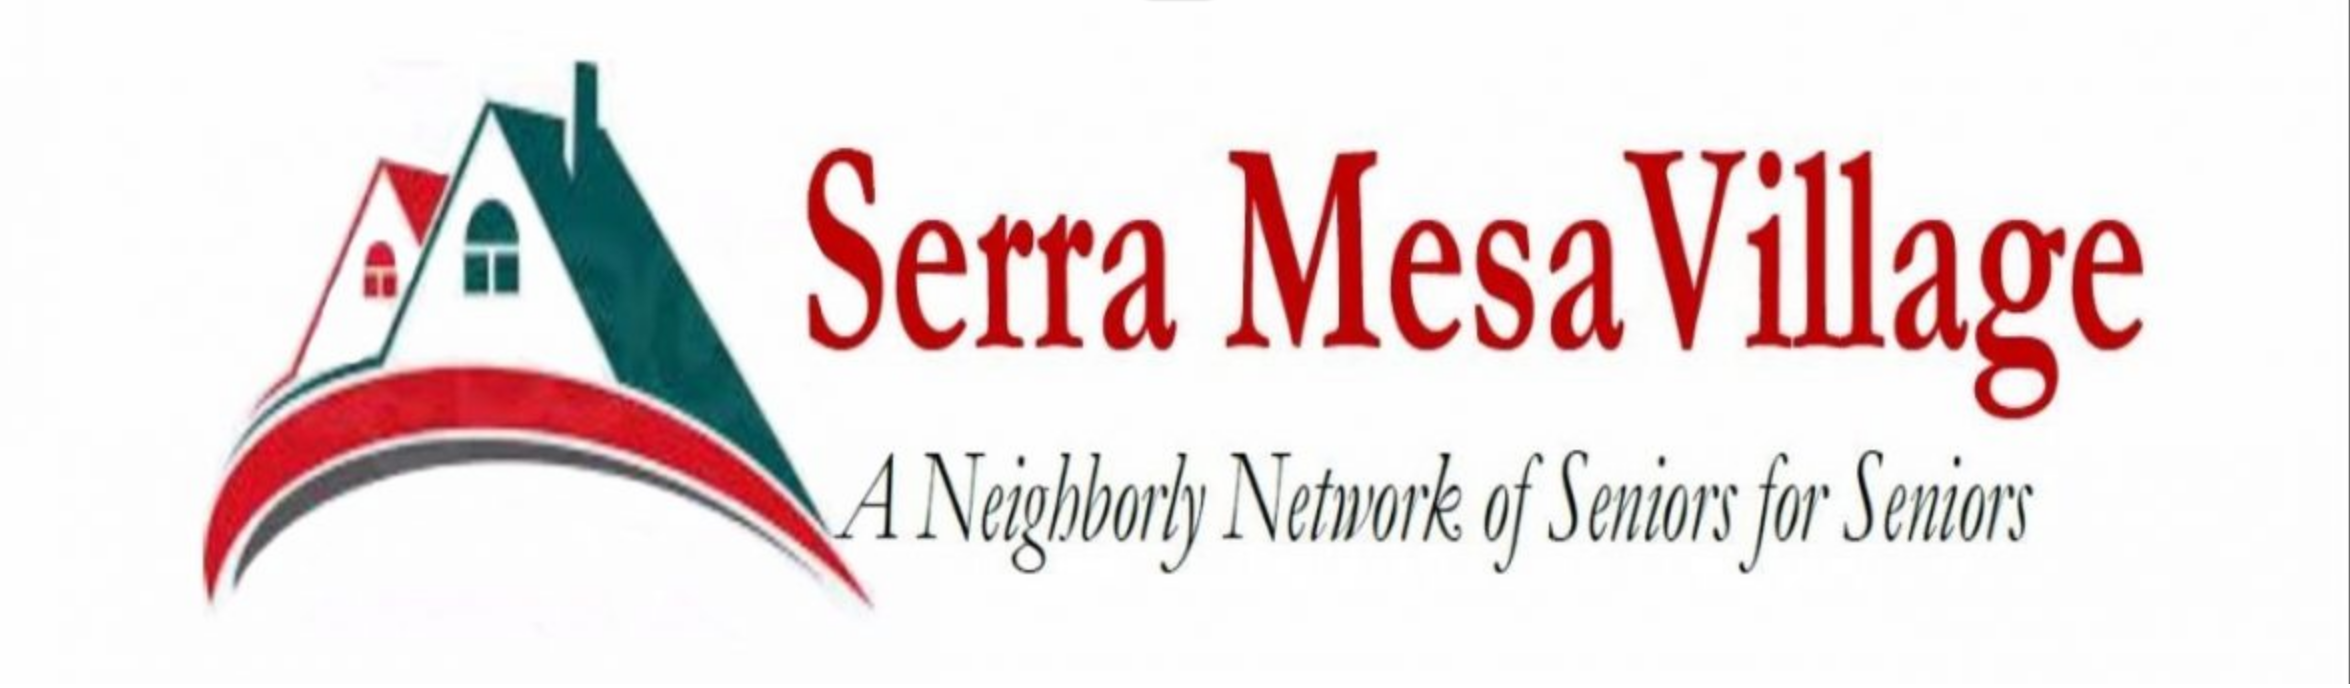 Serra Mesa Village logo